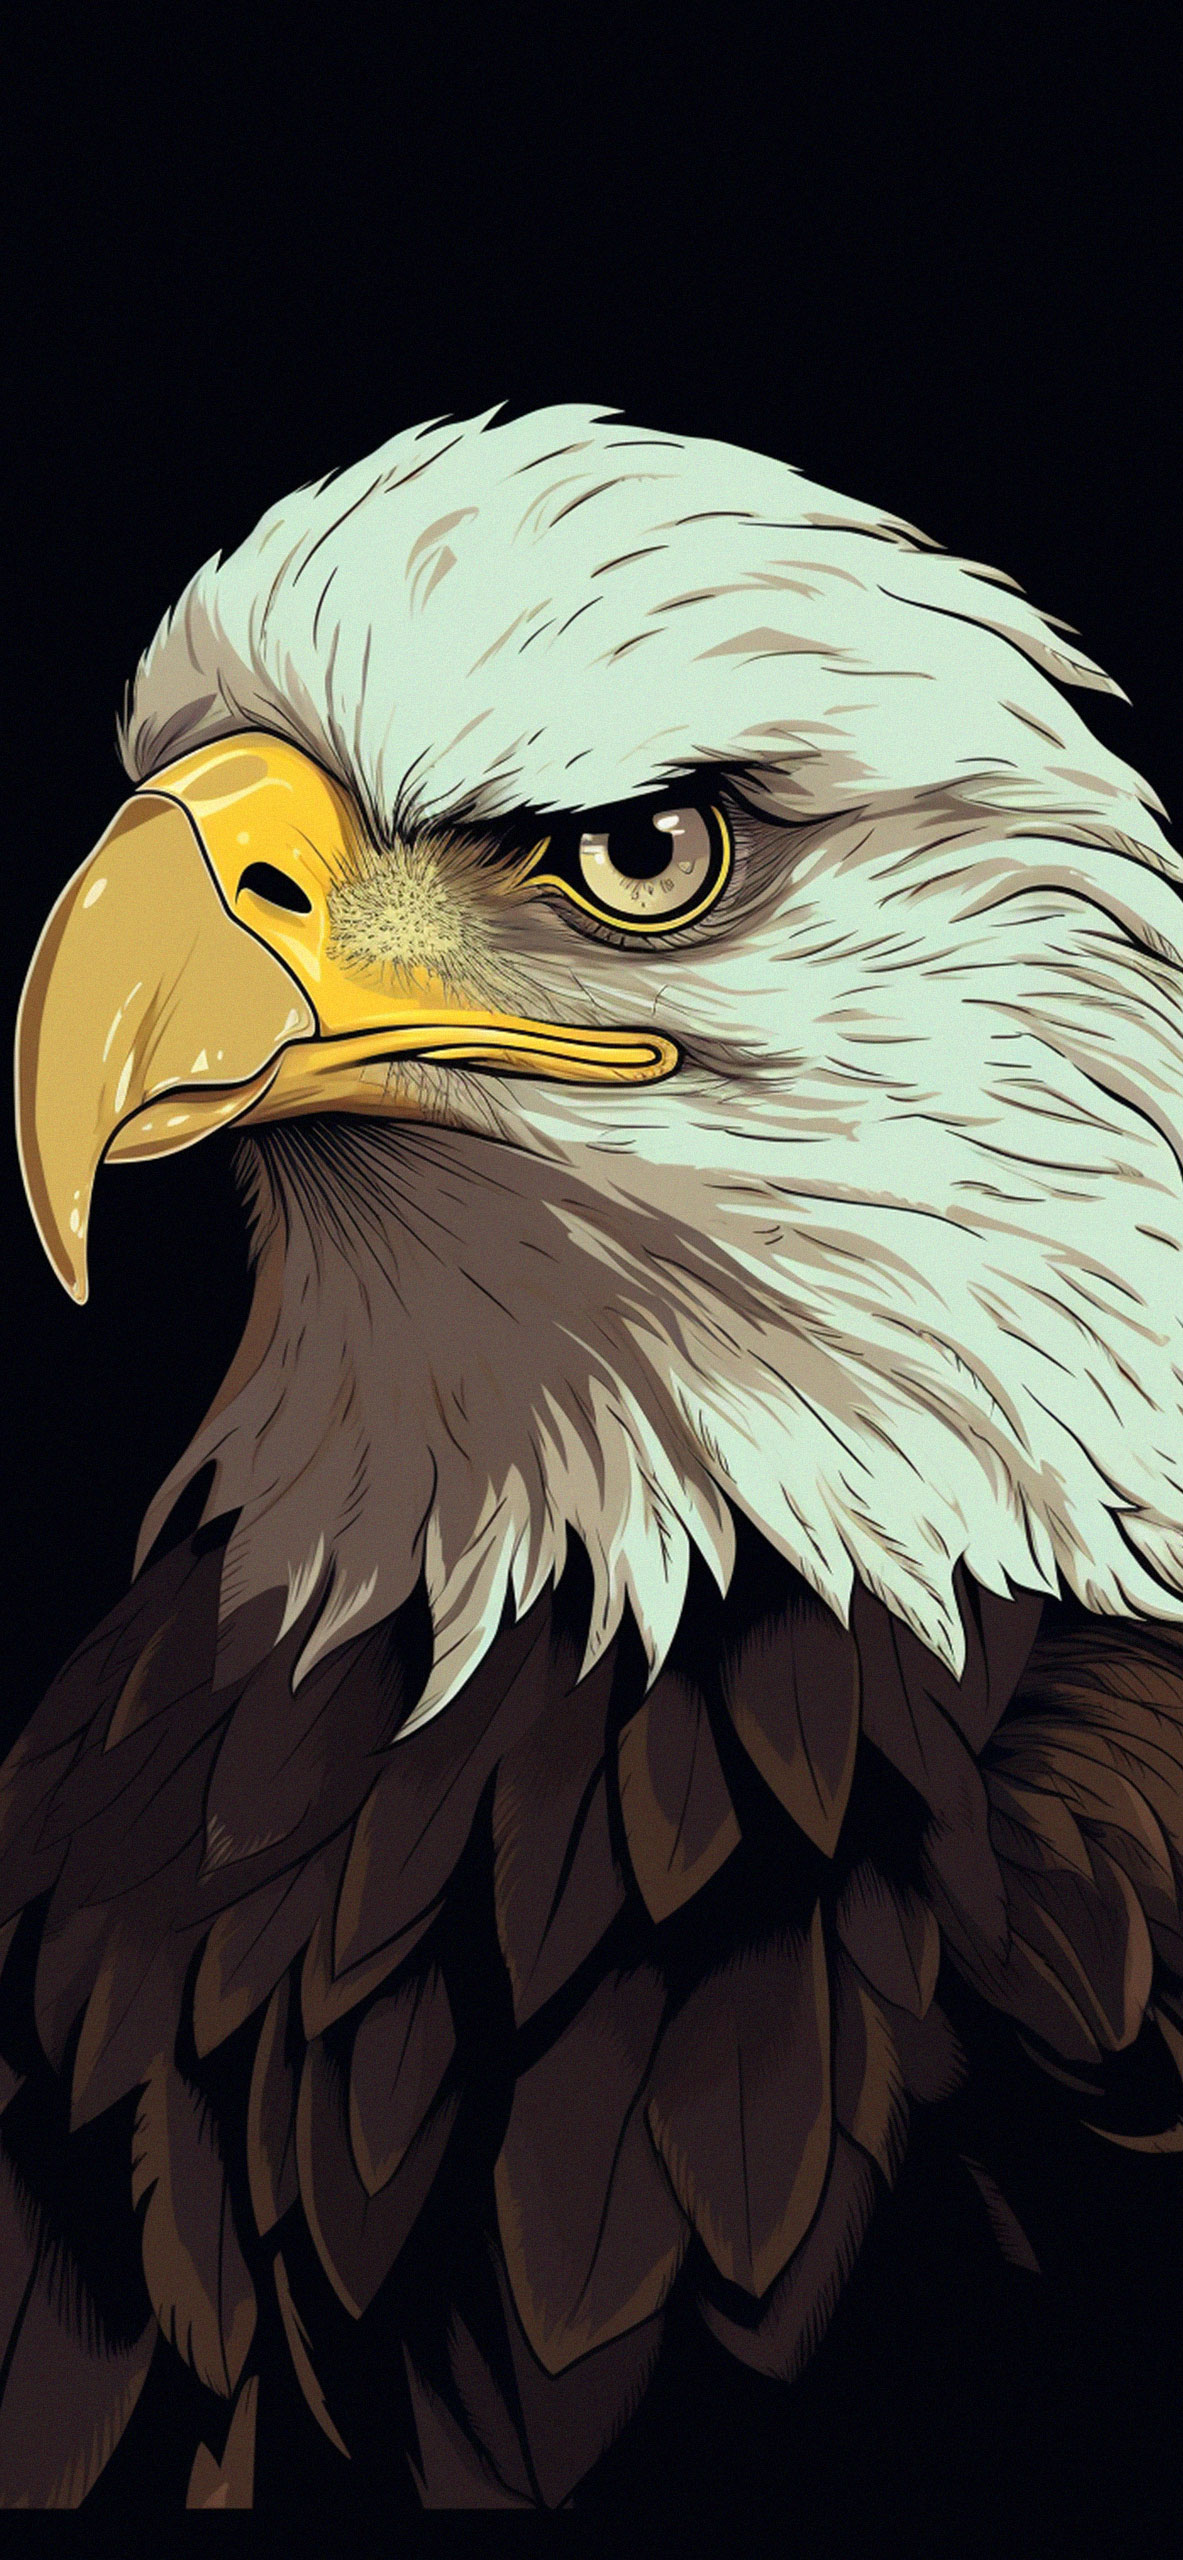 2160x3840 Eagle Raptor red eyes close up wallpaper  Eagle wallpaper  Eagle face Eagle pictures